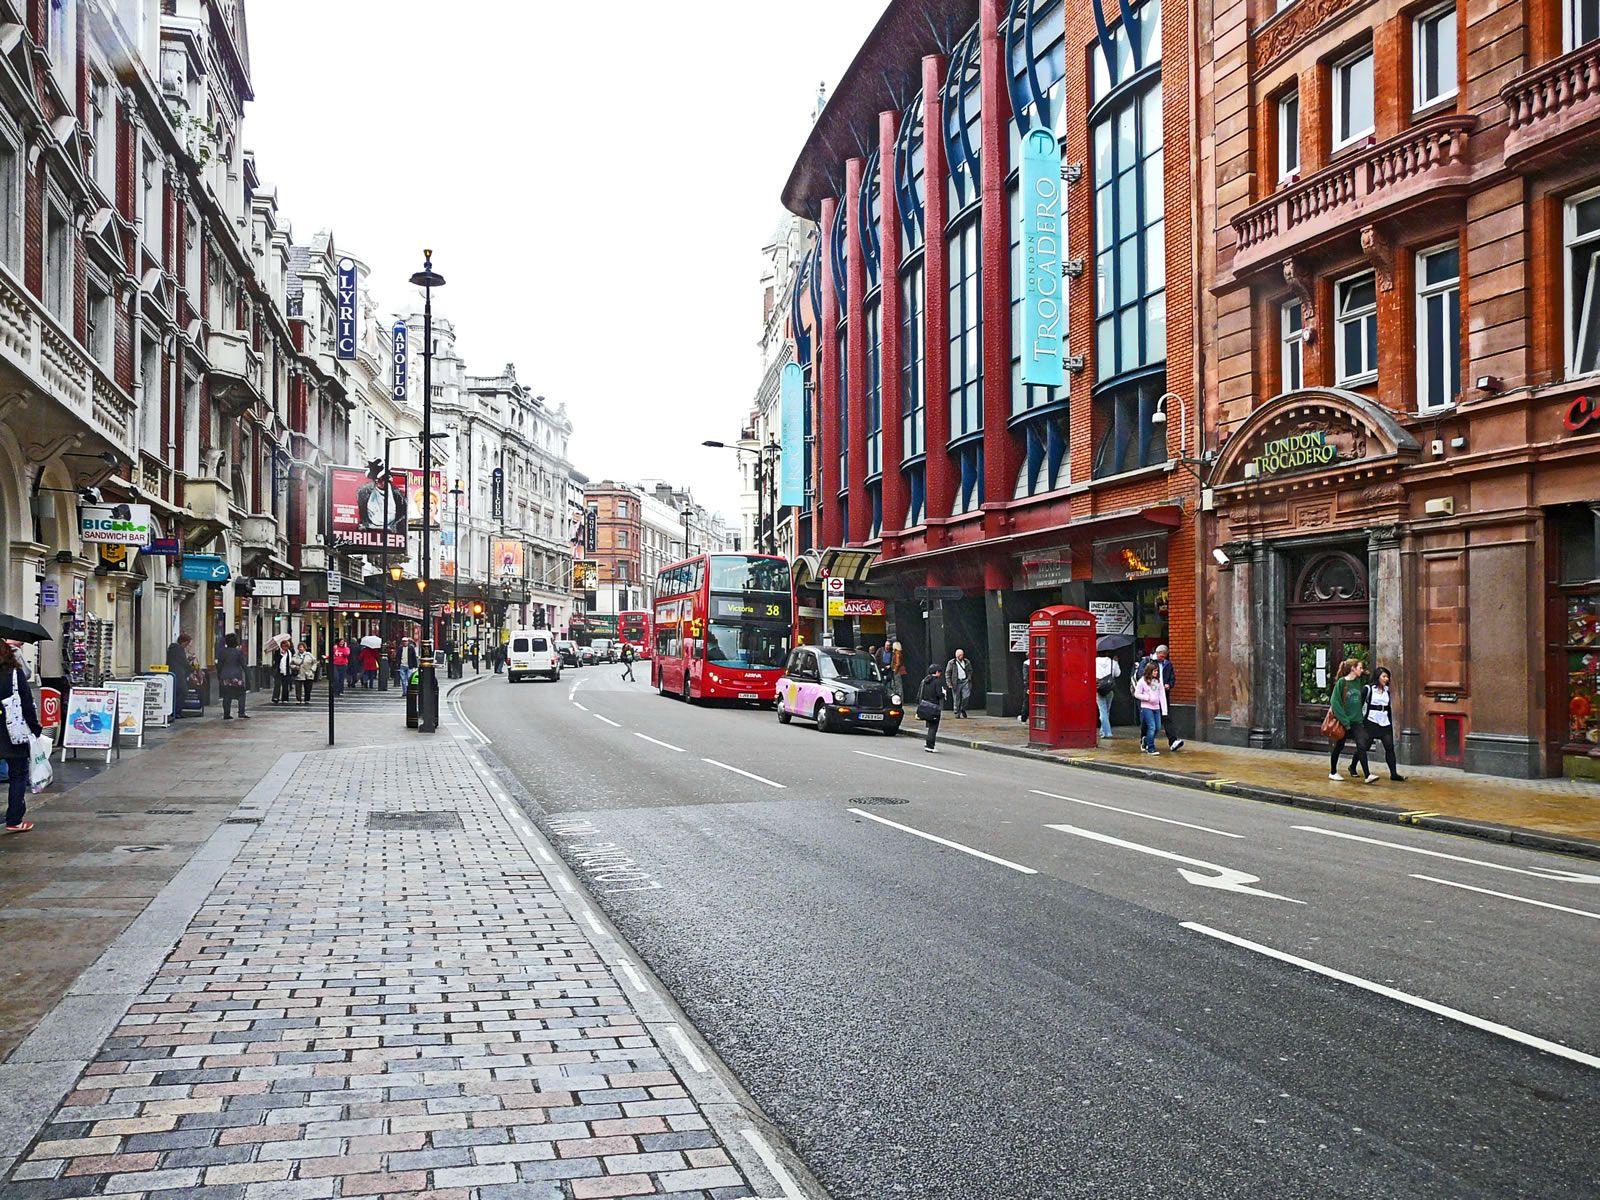 Street let. Улица Шафтсбери Авеню в Лондоне. Авеню роуд в Лондоне. Кингс роуд Англия. Корк стрит Лондон.